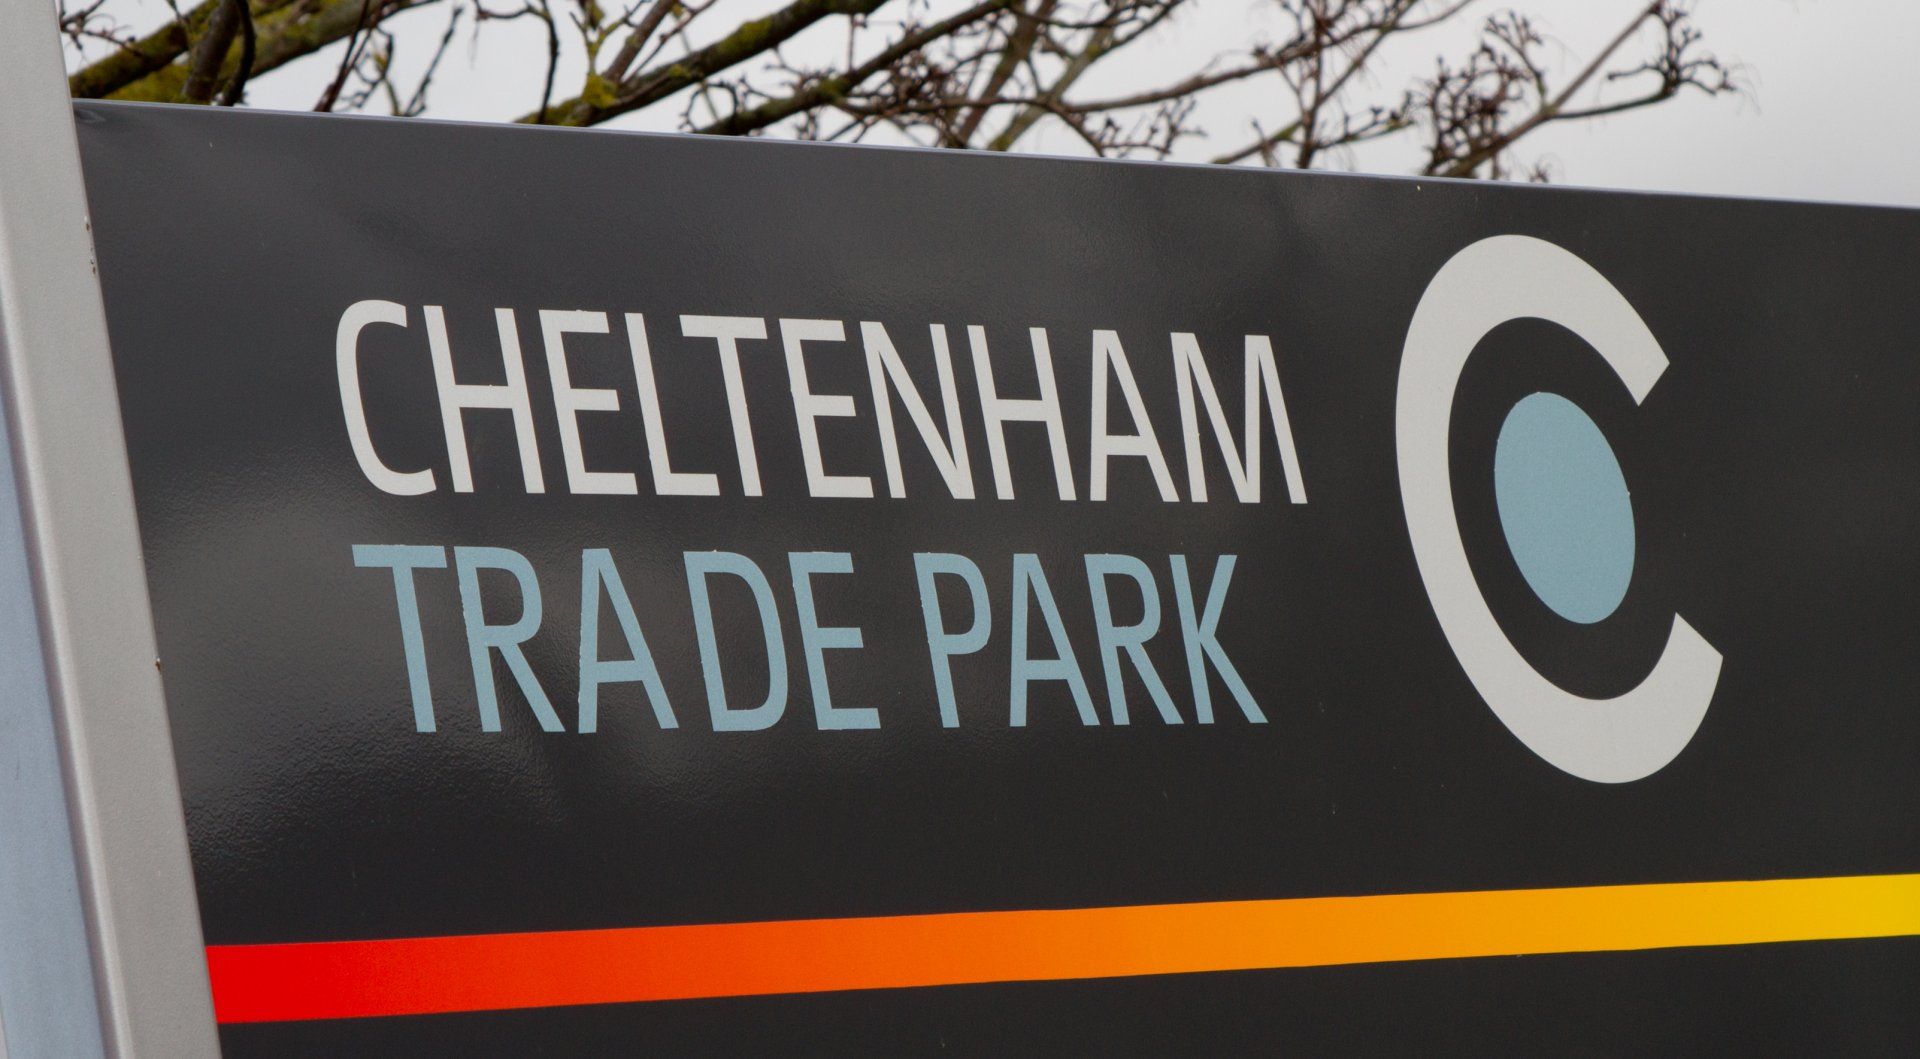 Cheltenham trade park signboard